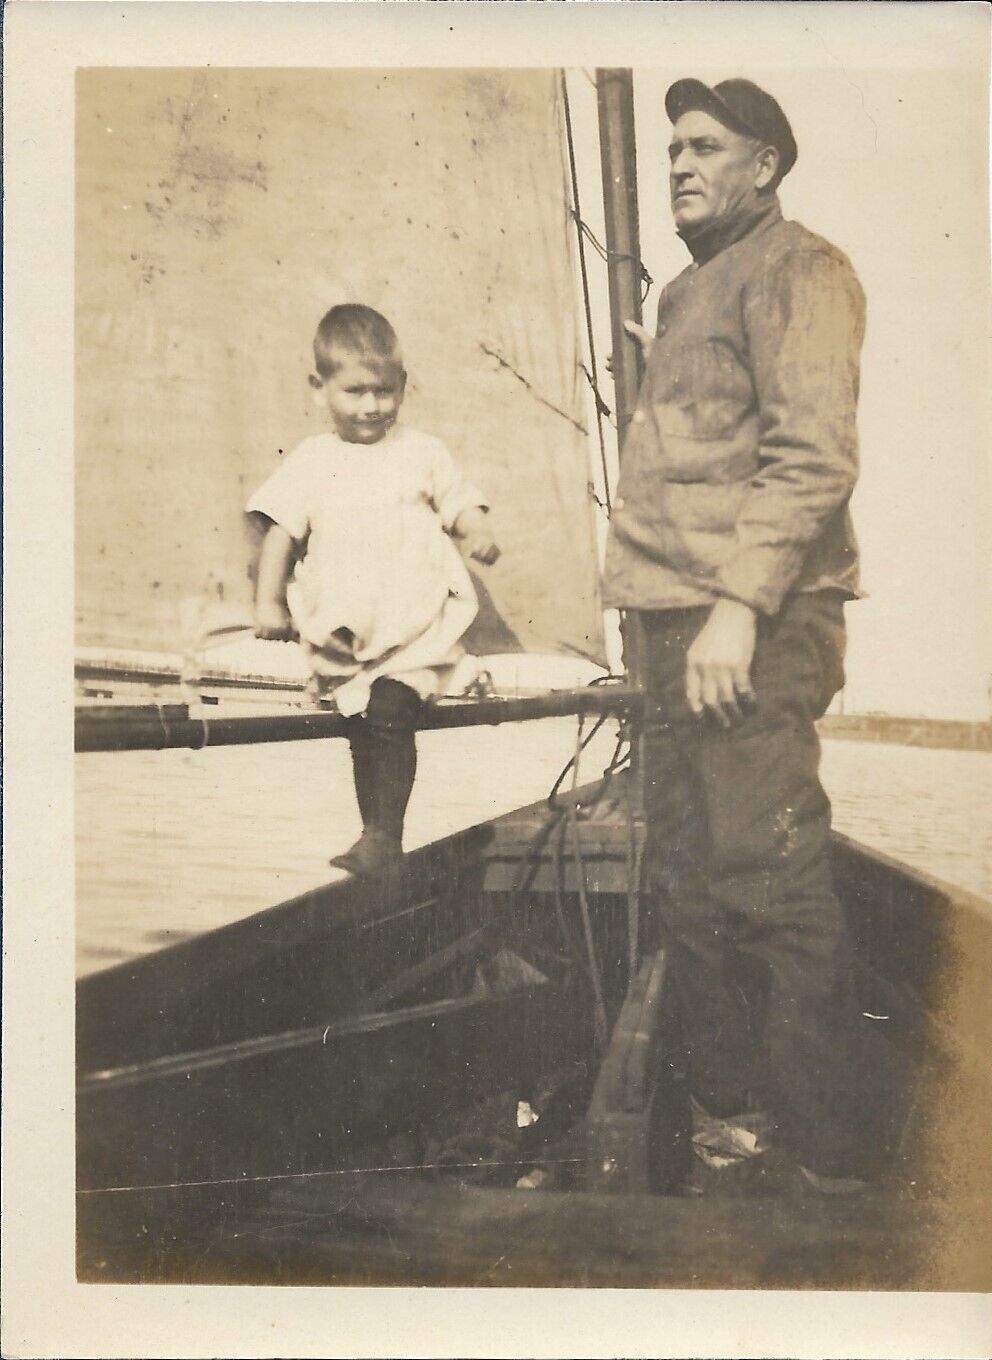 Man Little Boy Photograph Boat Vintage 1920s Sailboat Boating 3 1/4 x 4 1/2